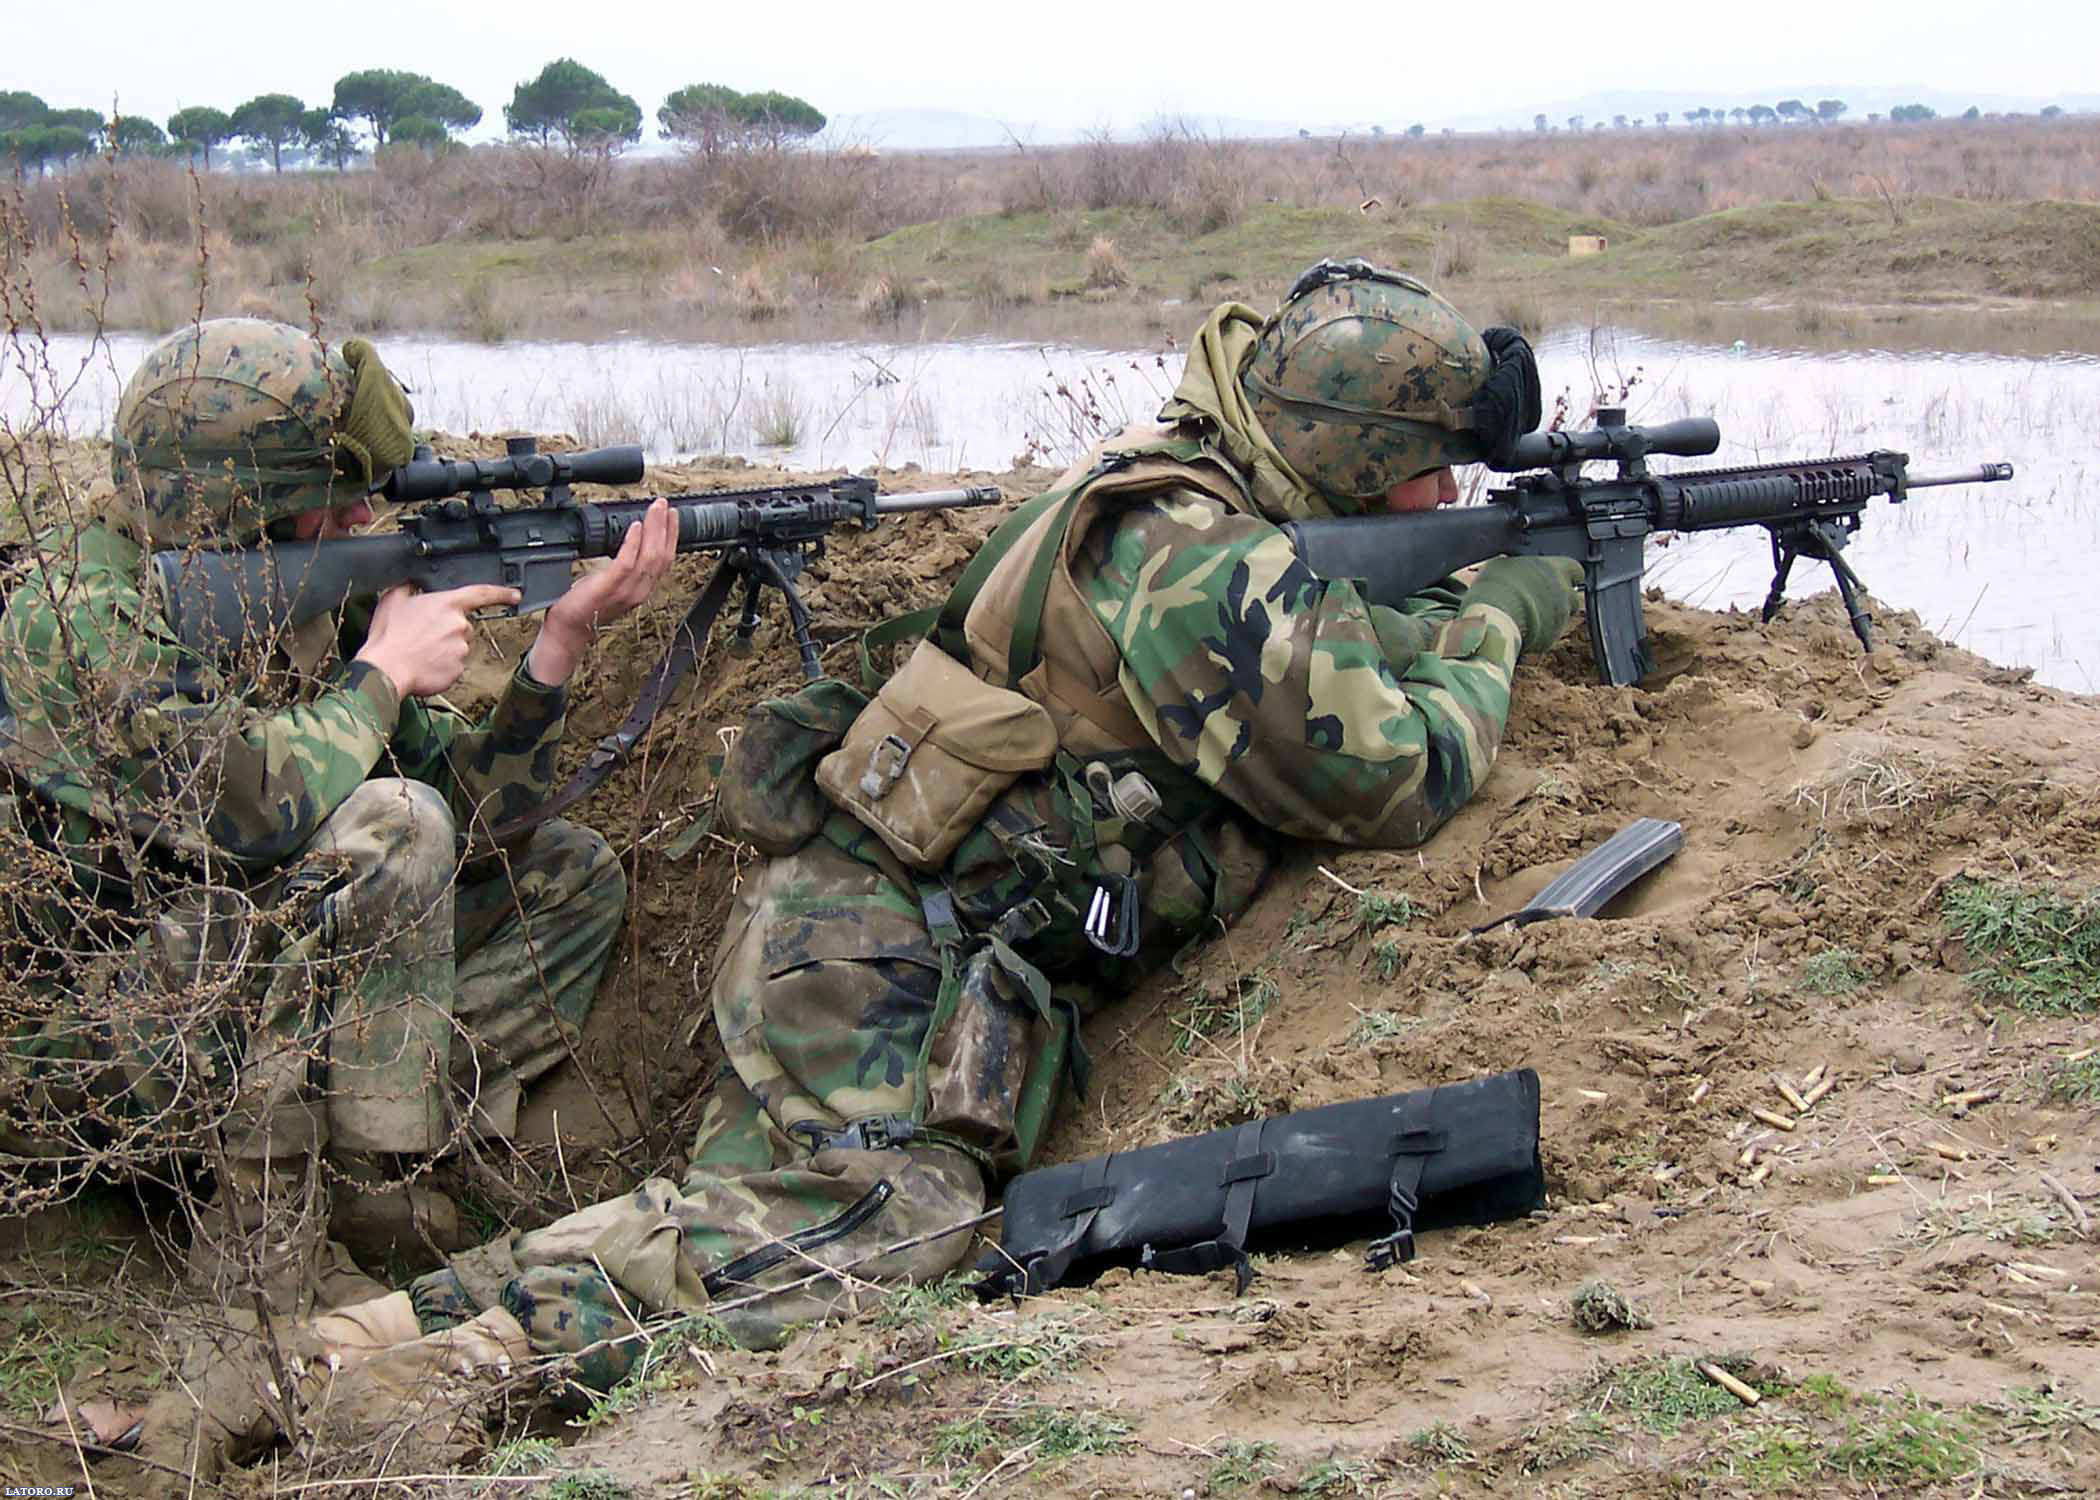 Marines with sniper rifle Desktop Wallpapers FREE on Latorocom 2100x1500